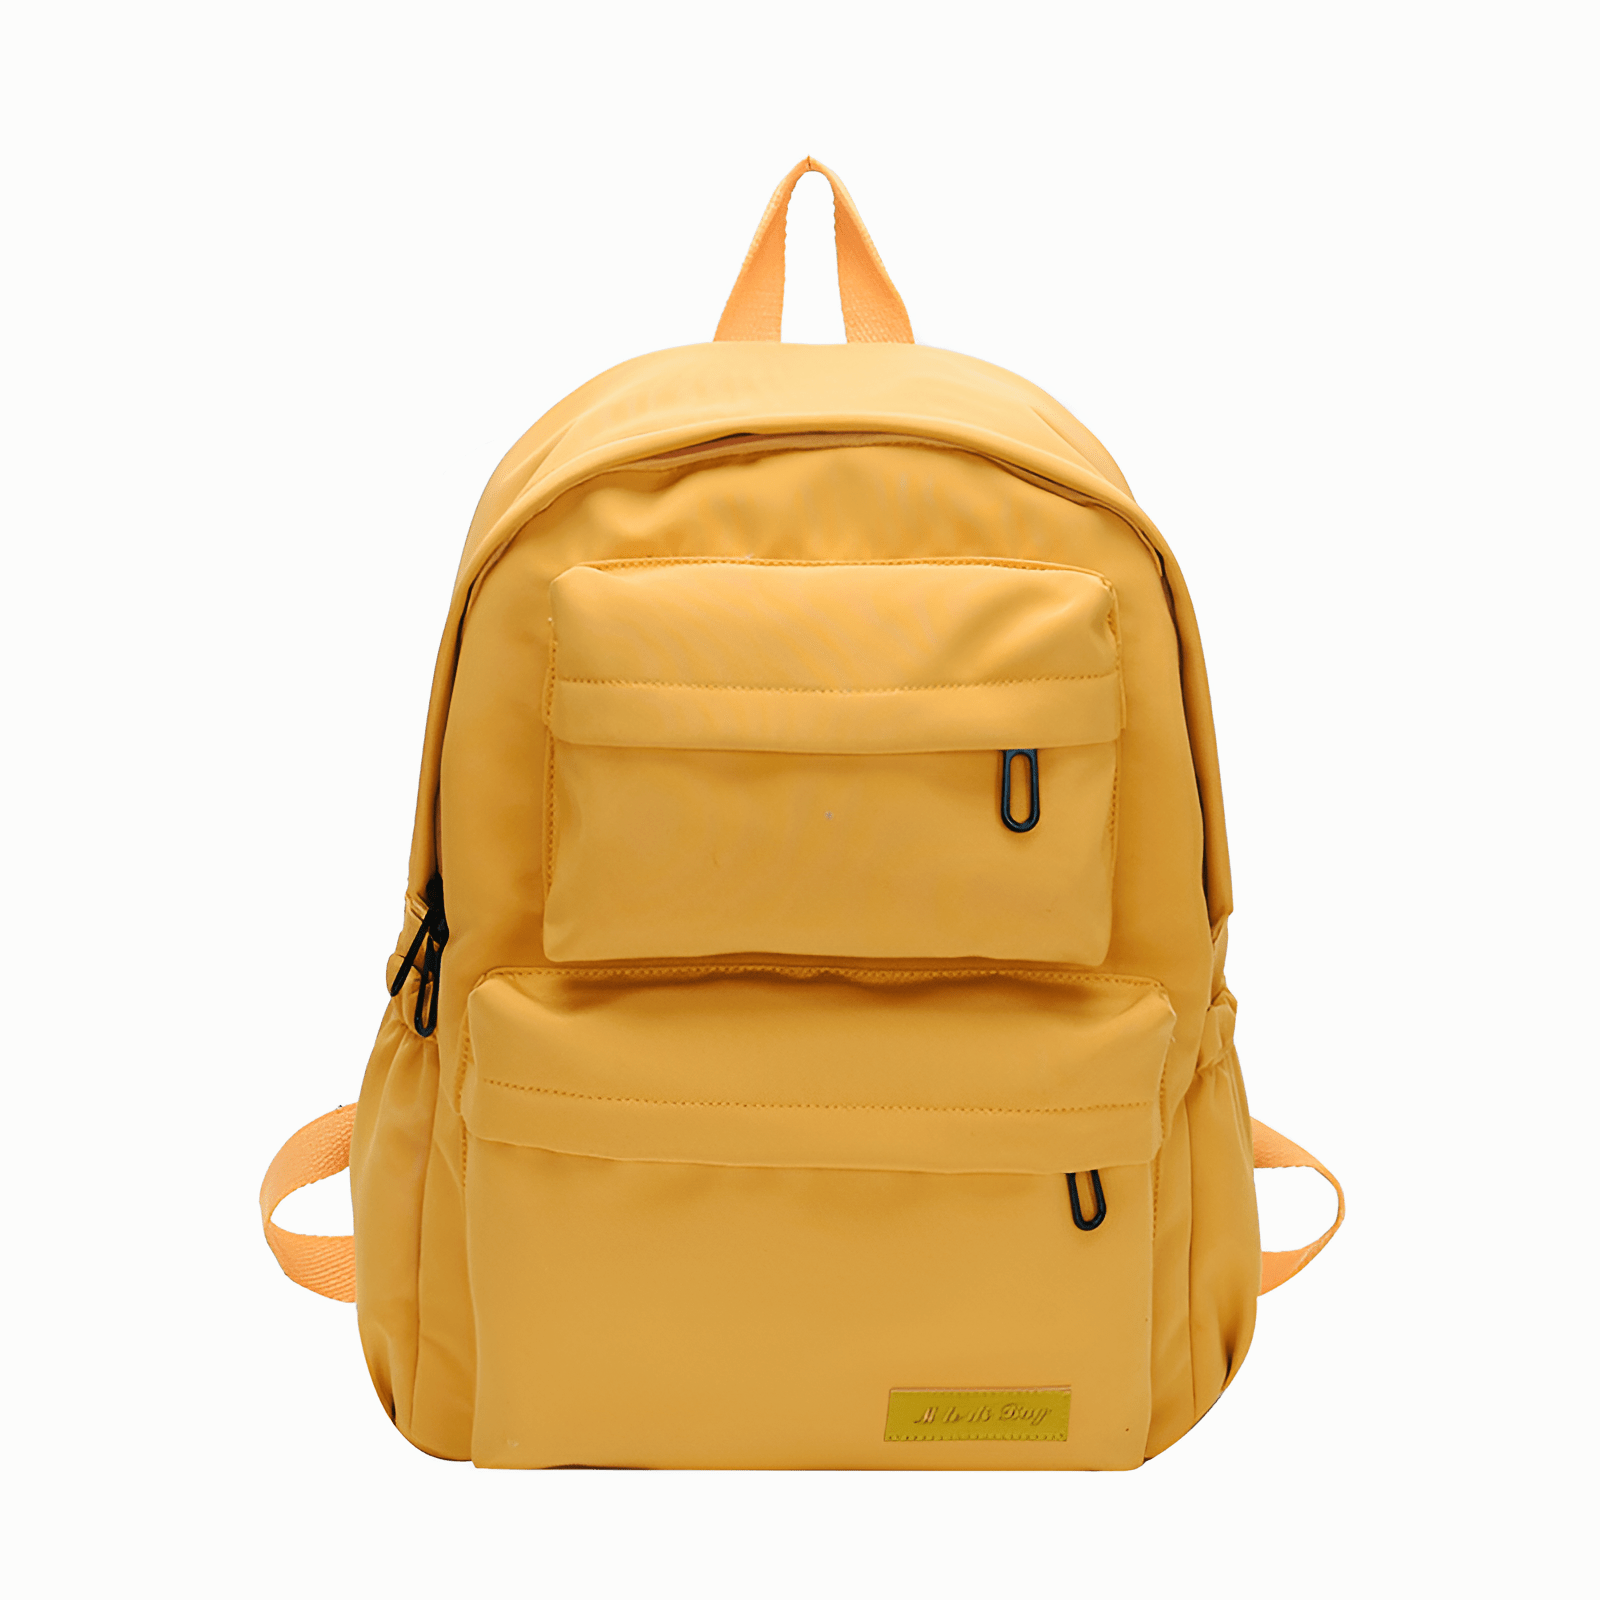 Waterproof Mochilas School Backpack — More than a backpack